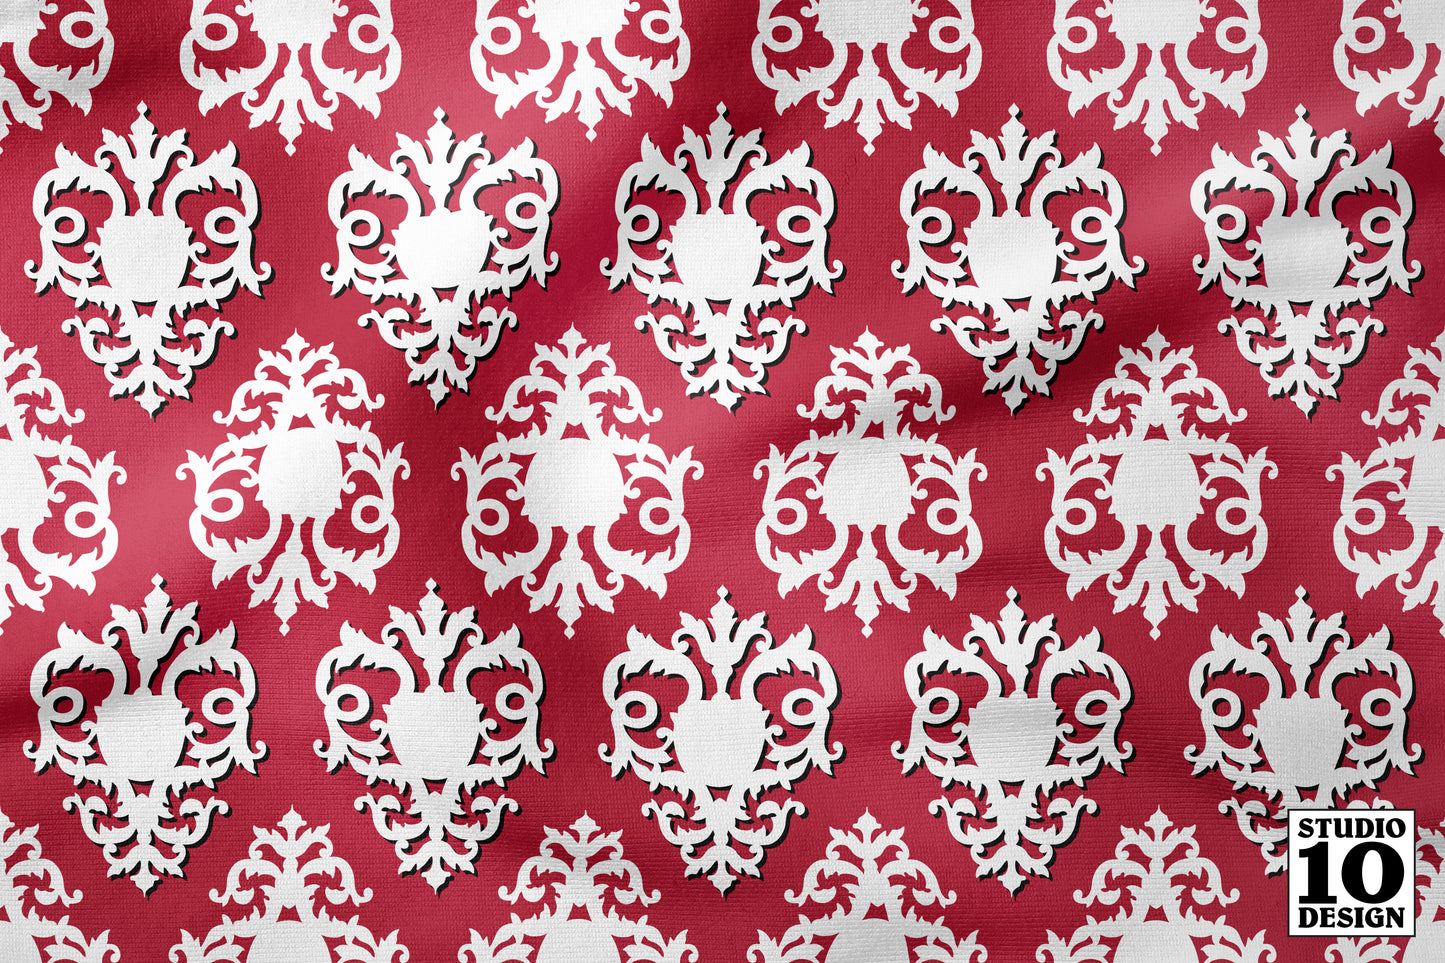 Damask (Red, White, Black) Printed Fabric by Studio Ten Design